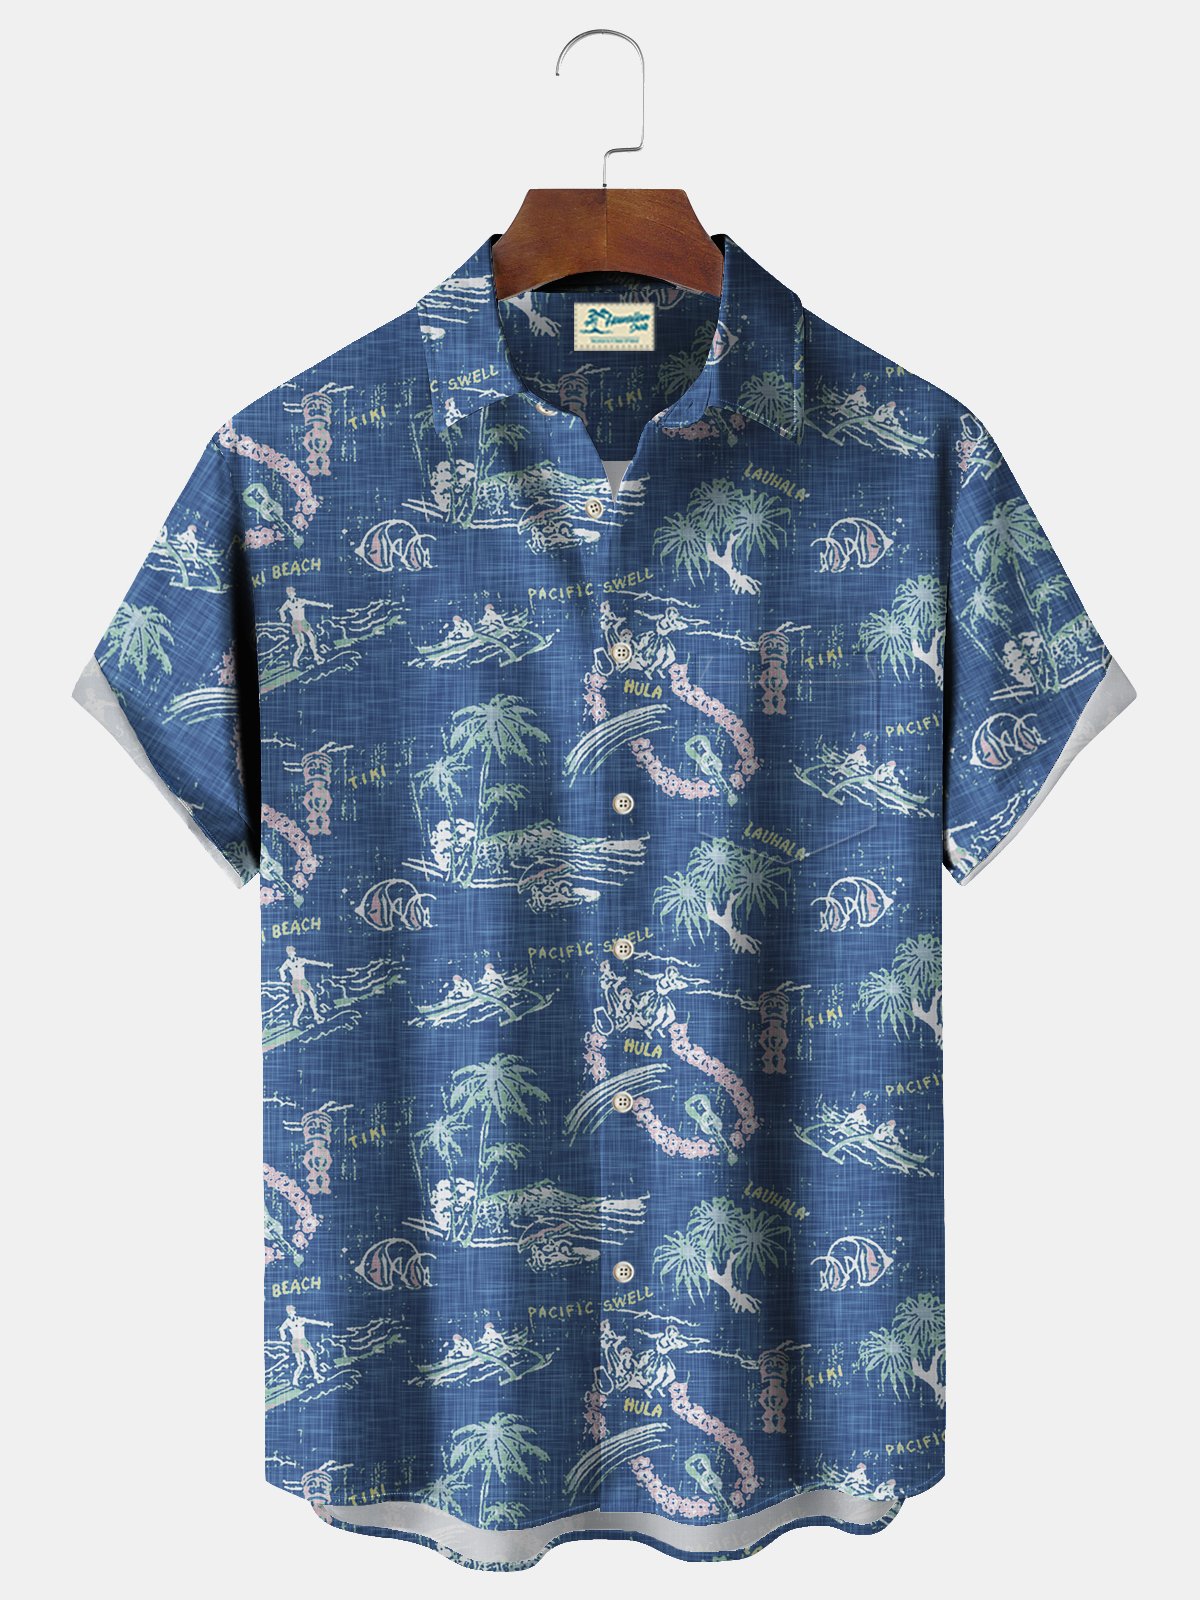 Royaura® Men's Hawaiian Shirt Coconut Beach Seersucker Wrinkle-Resistant Pocket Camping Shirt Big Tall